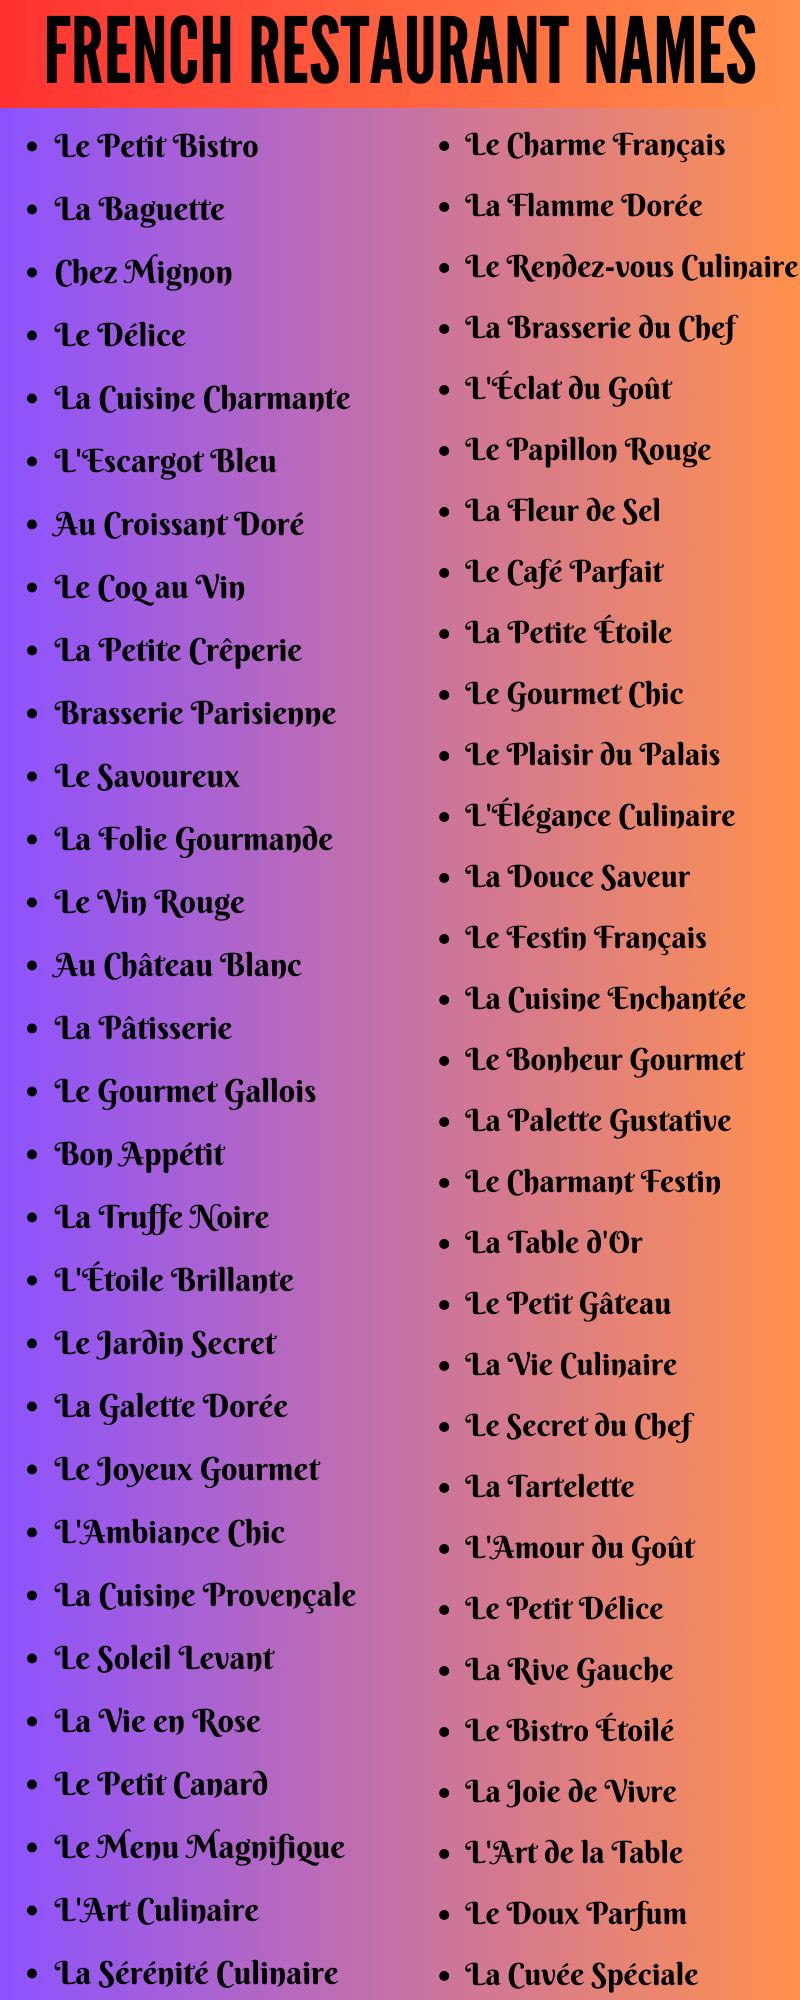 French Restaurant Names